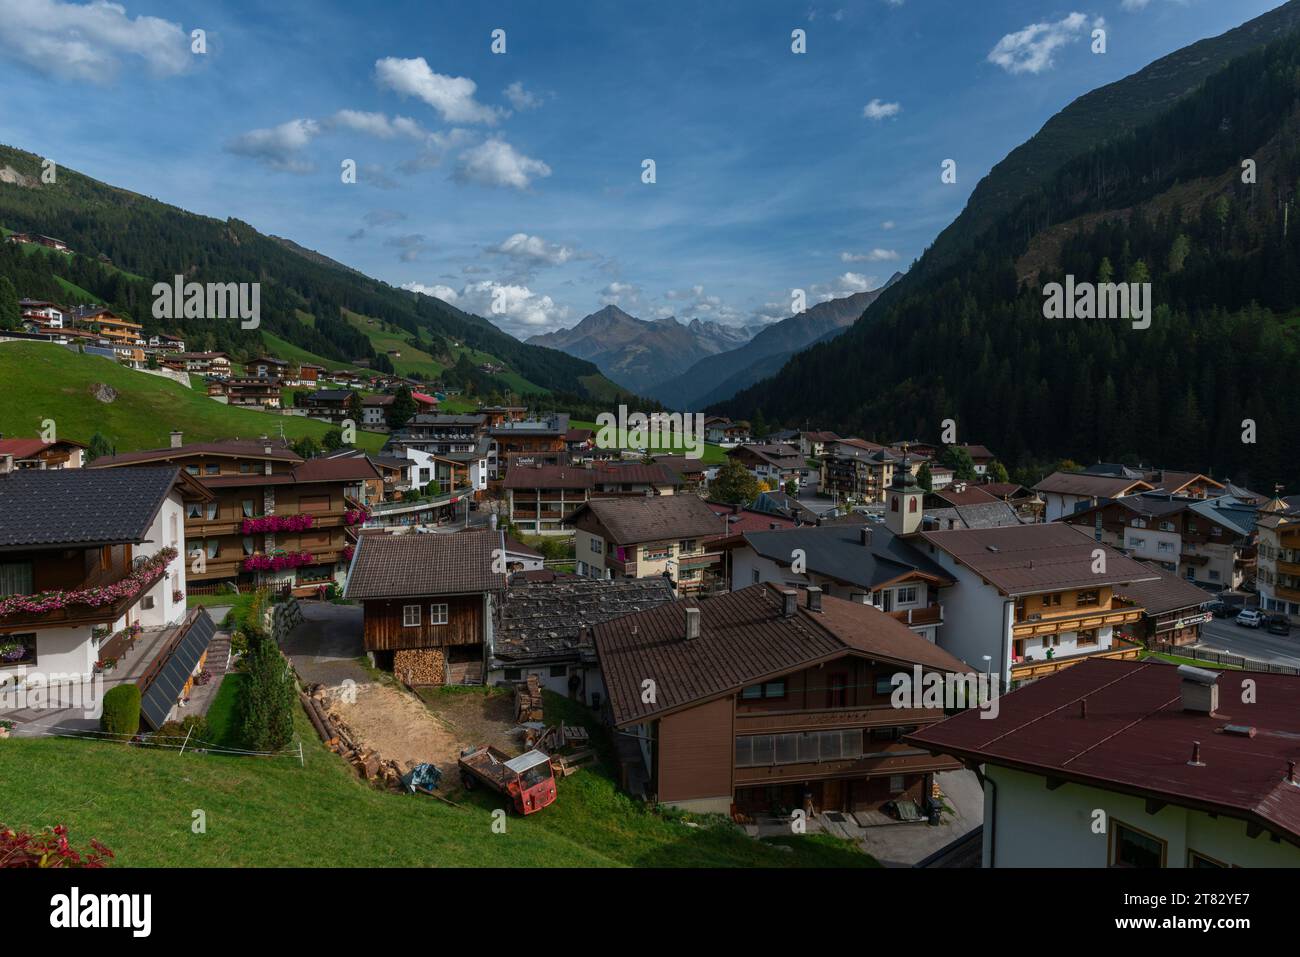 Village touristique Lanersbach, Vorder-Lahnersbach, rural, paysage alpin, Vallée Tuxertal, Zillertaler Alpes, Tyrol, Autriche Banque D'Images